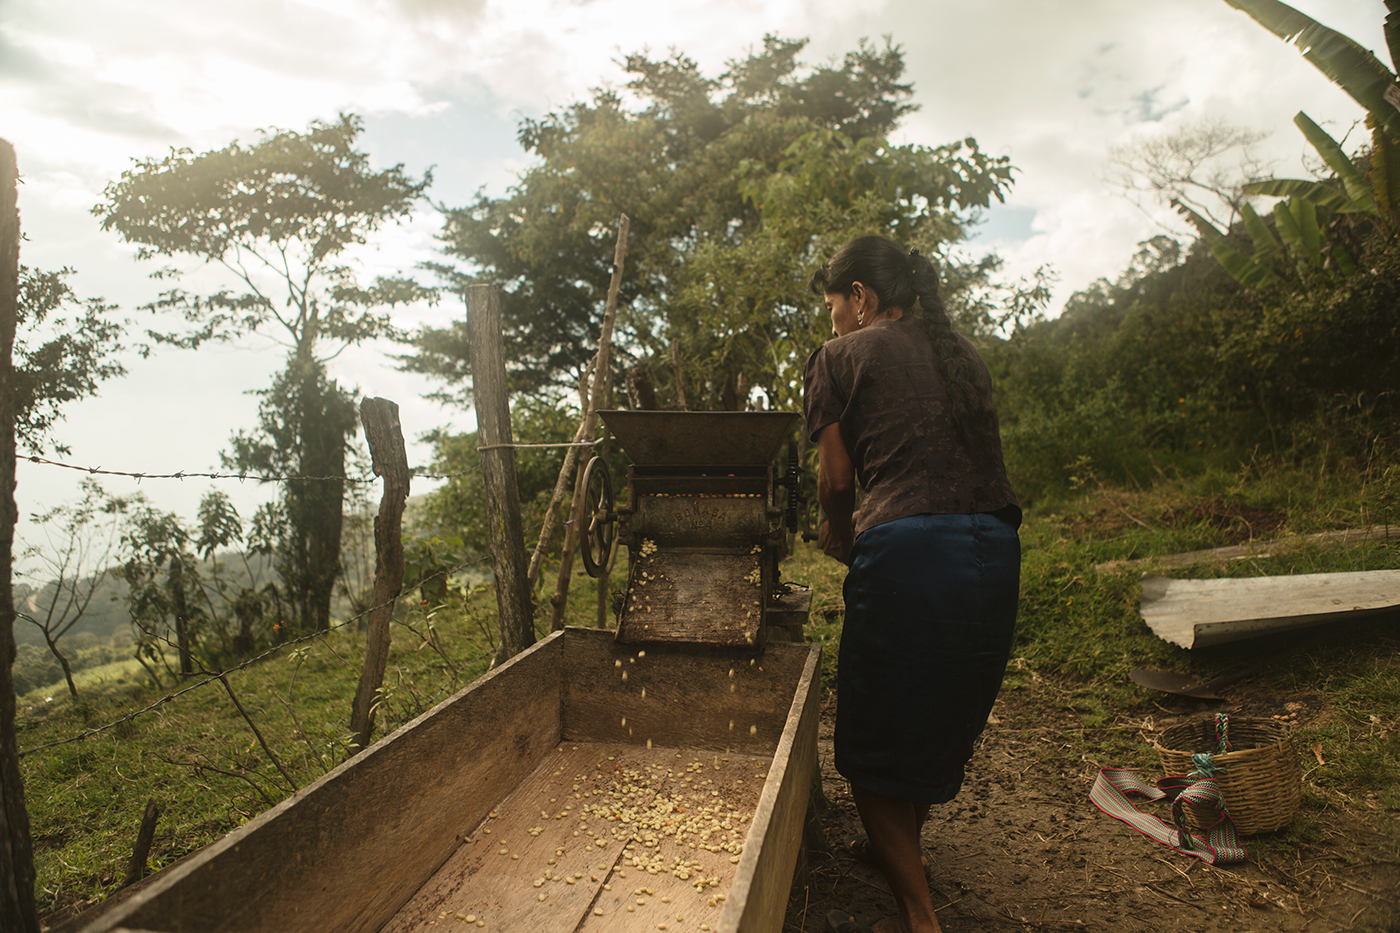 Coffee mexico profoto Canon strobist portrait reportage Documentary  discover Workers